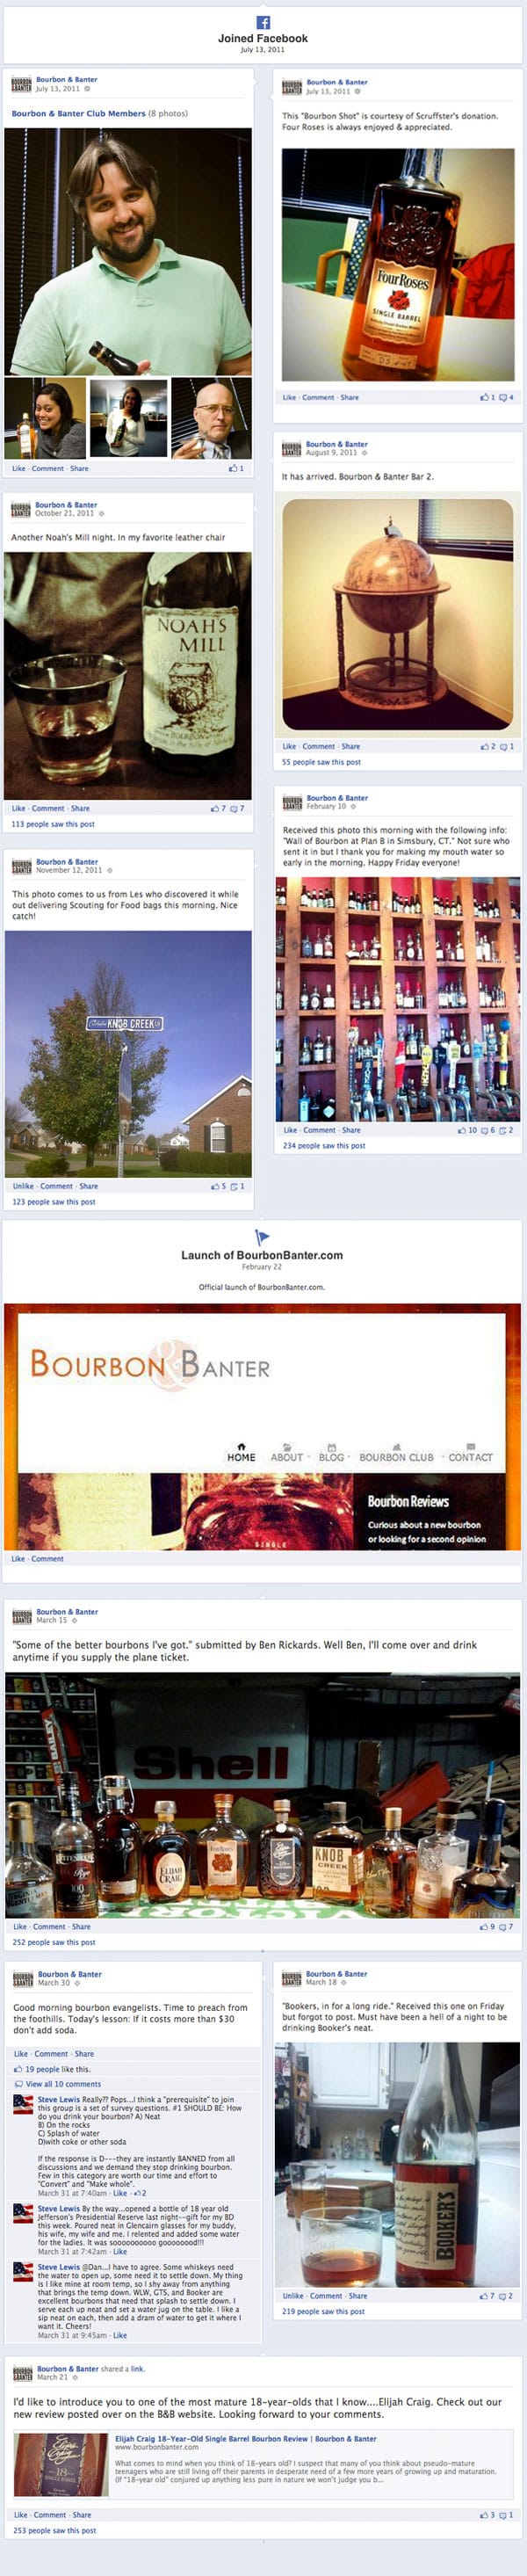 Bourbon & Banter Facebook 1st Anniversary